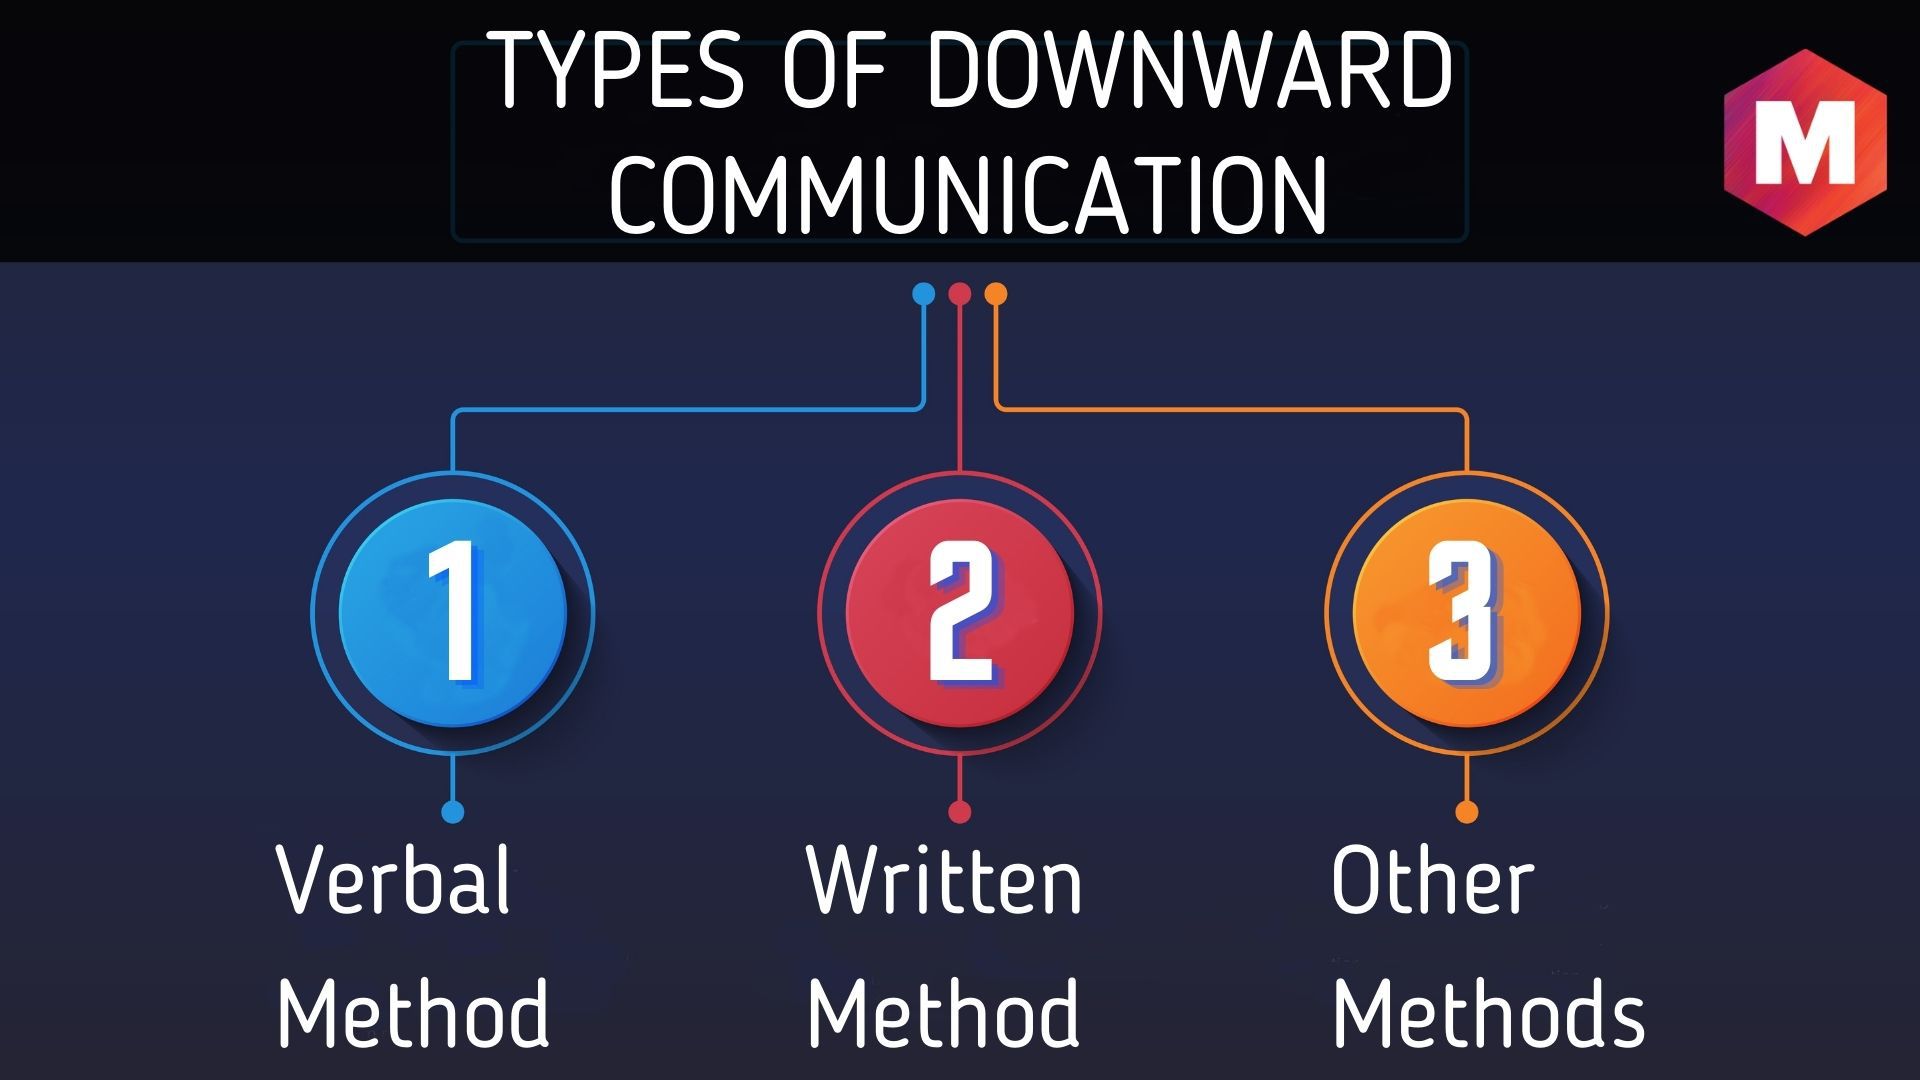 Types of Downward Communication